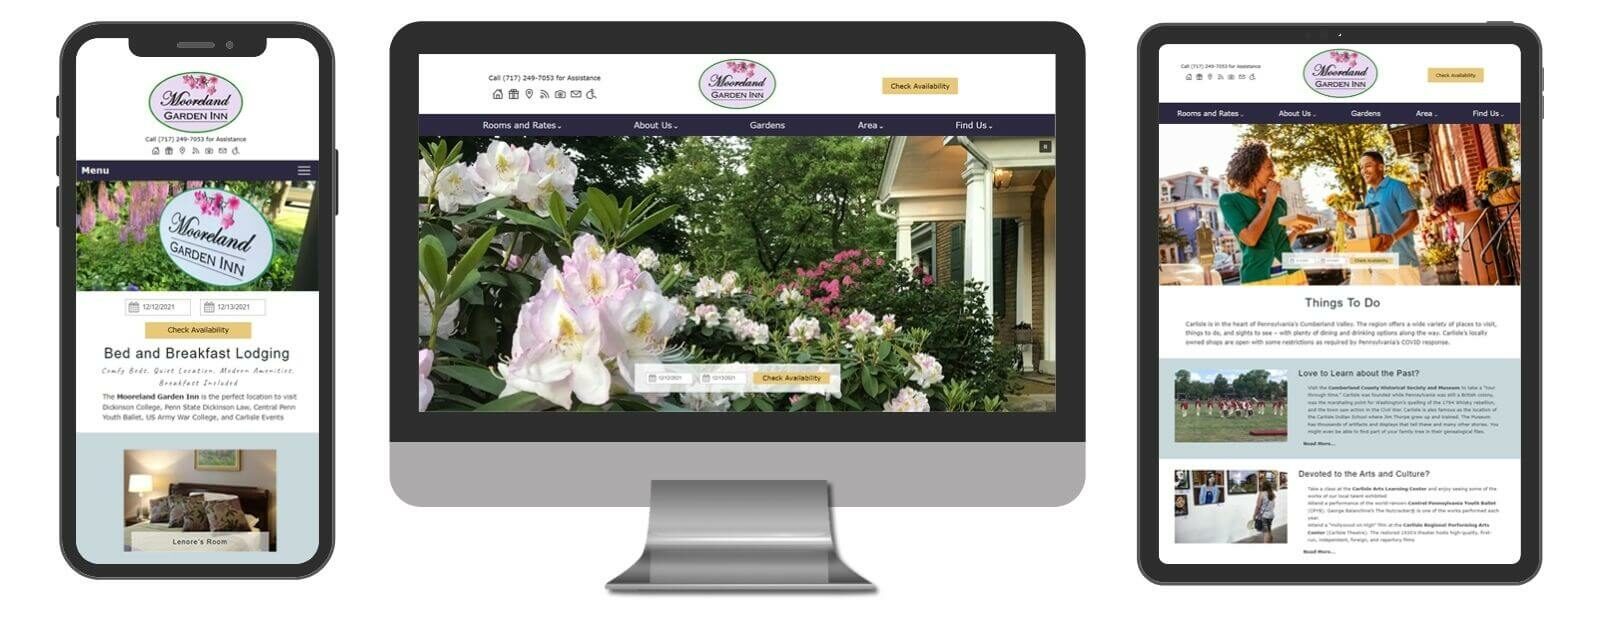 Mooreland Garden Inn website displayed in 3 sizes - mobile, template and desktop